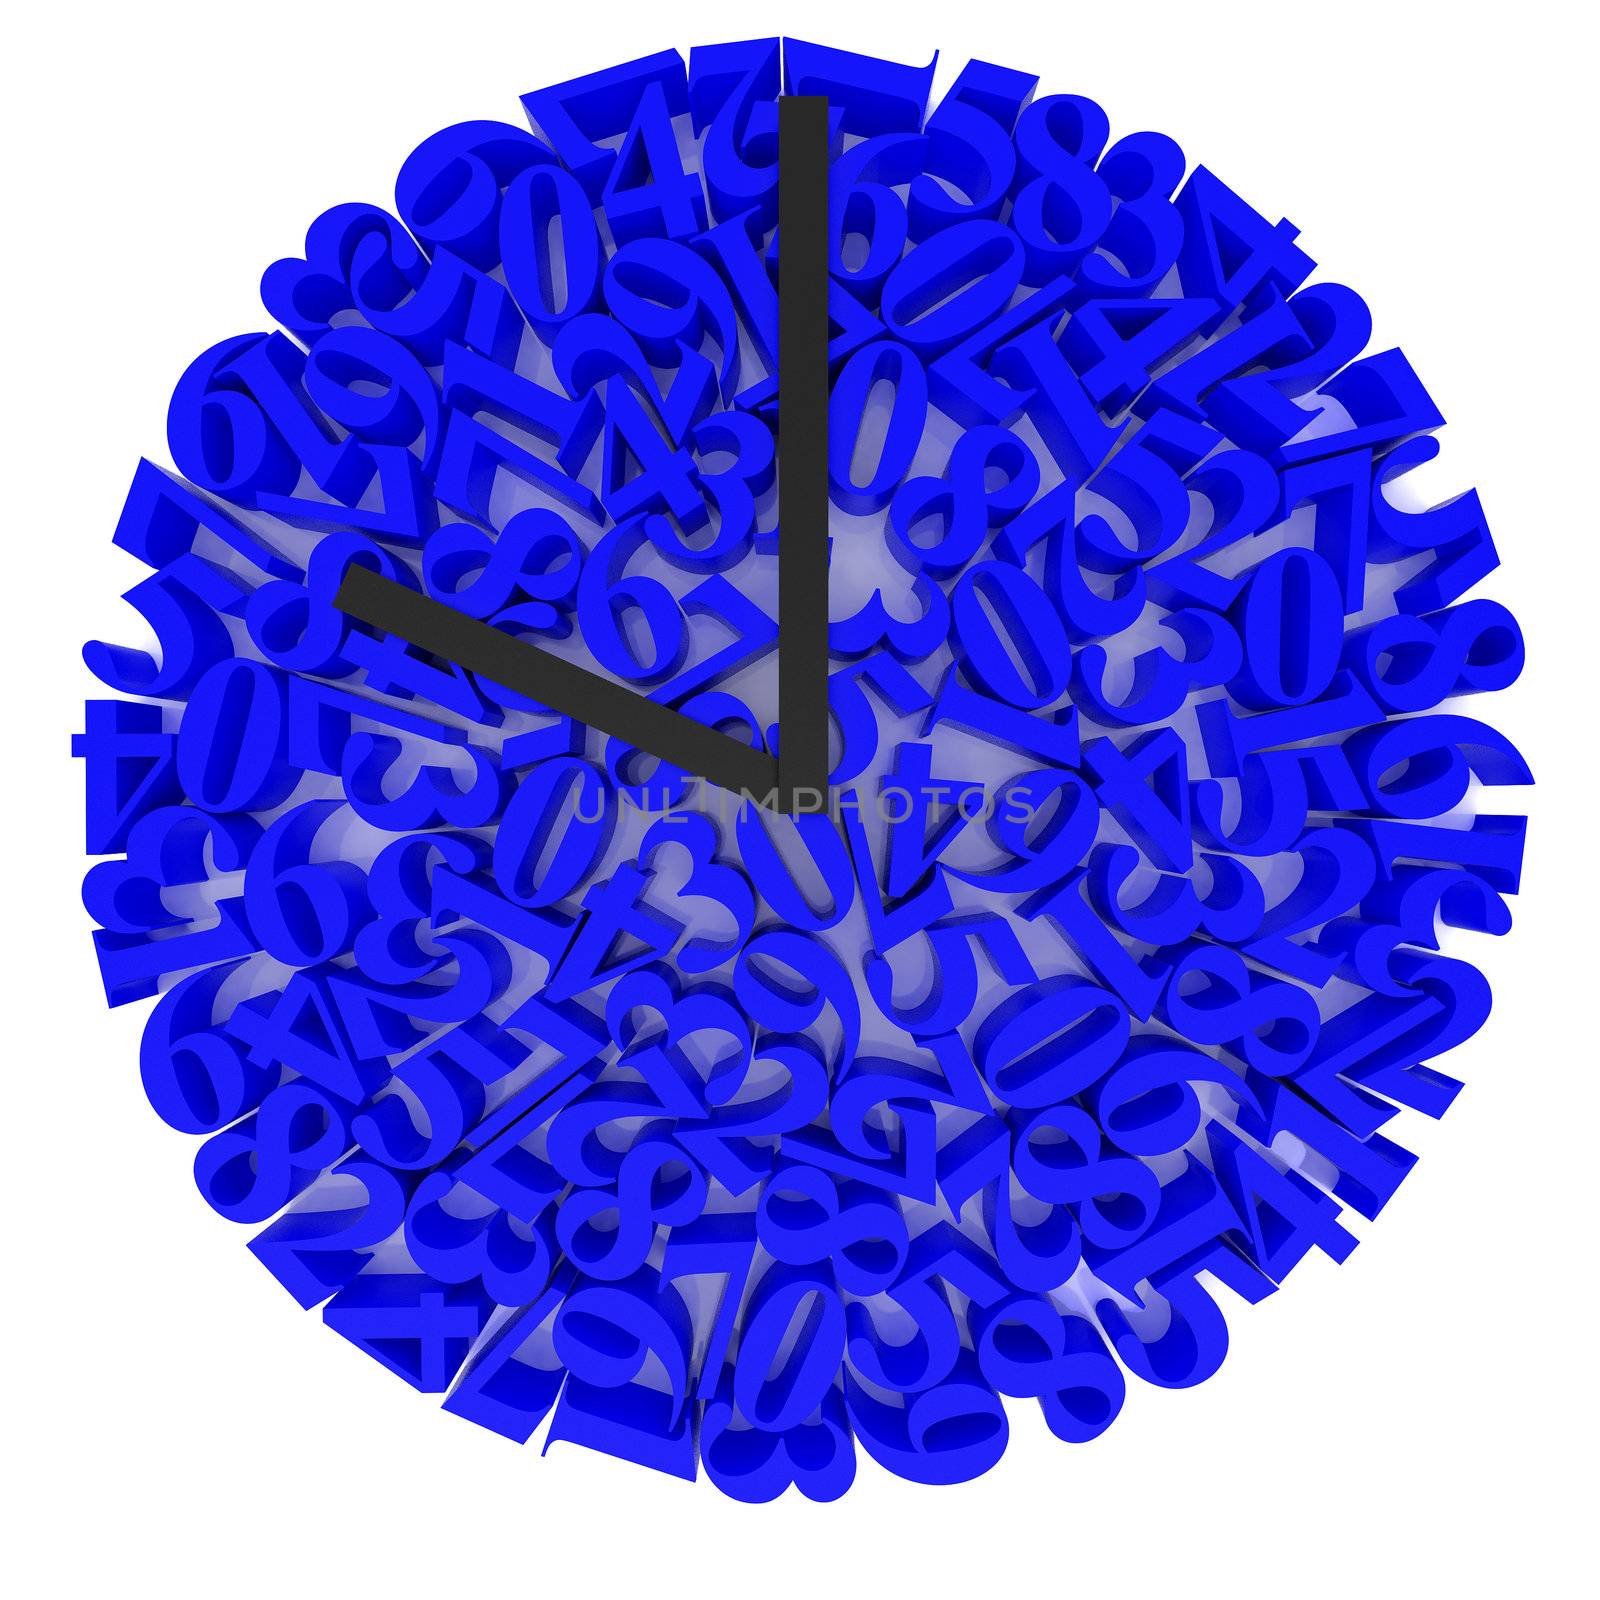 High resolution image. 3d rendered illustration. The original clock face.